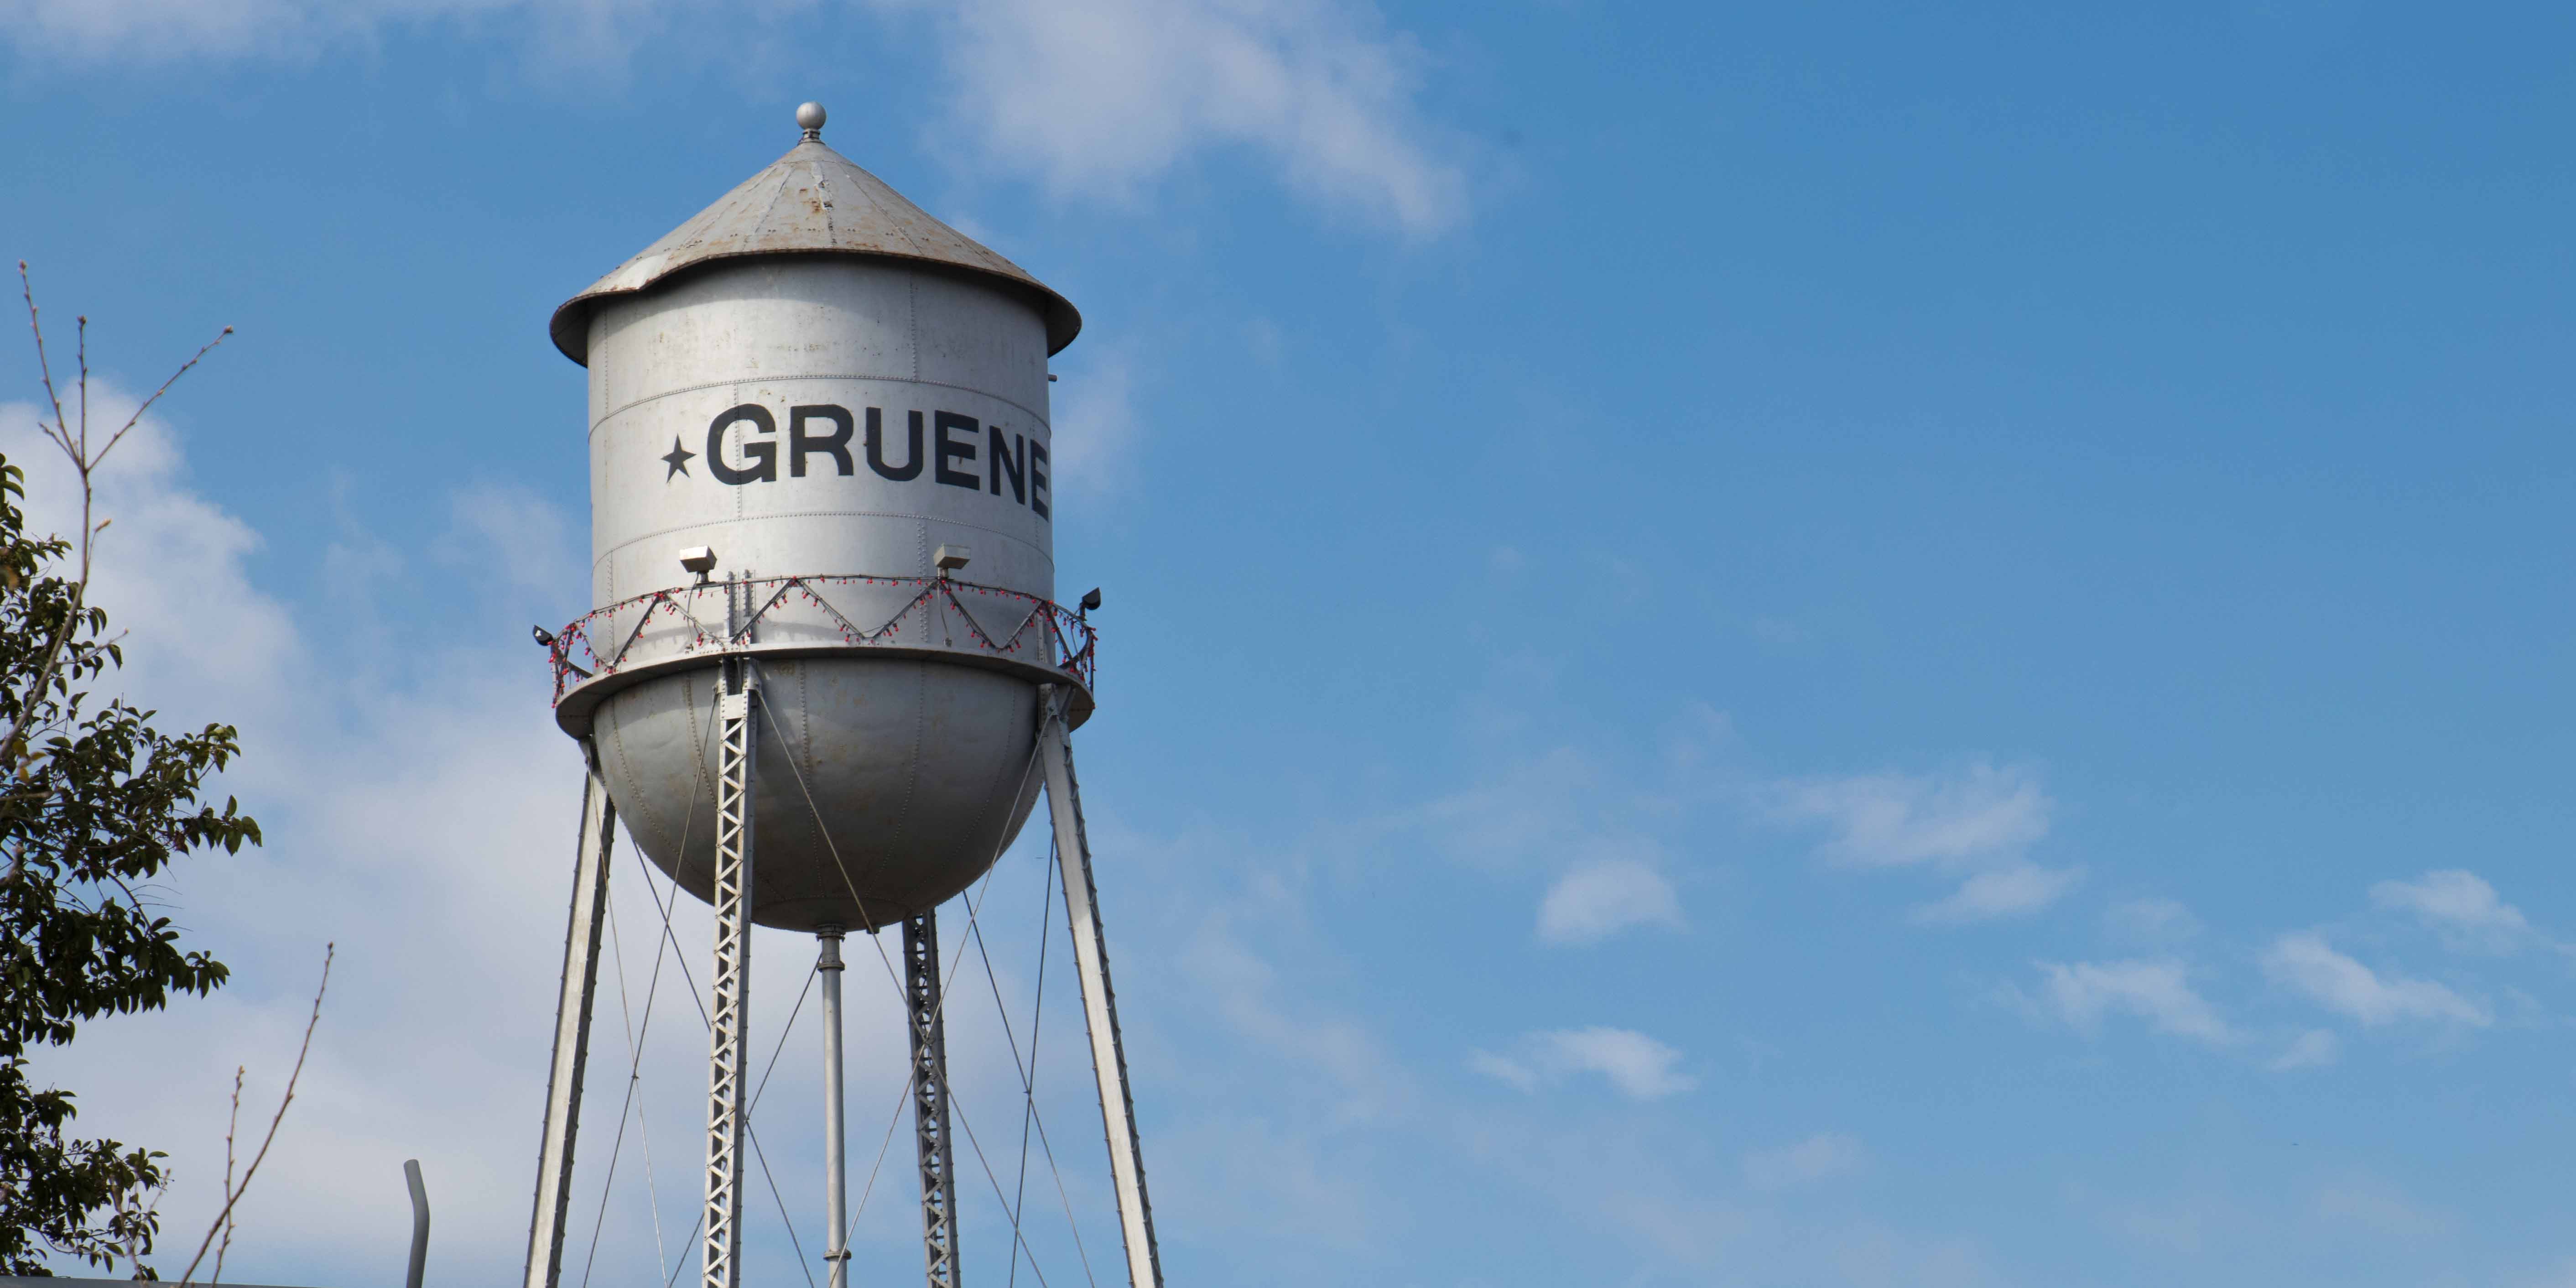 The iconic Gruene water tower in Gruene, TX